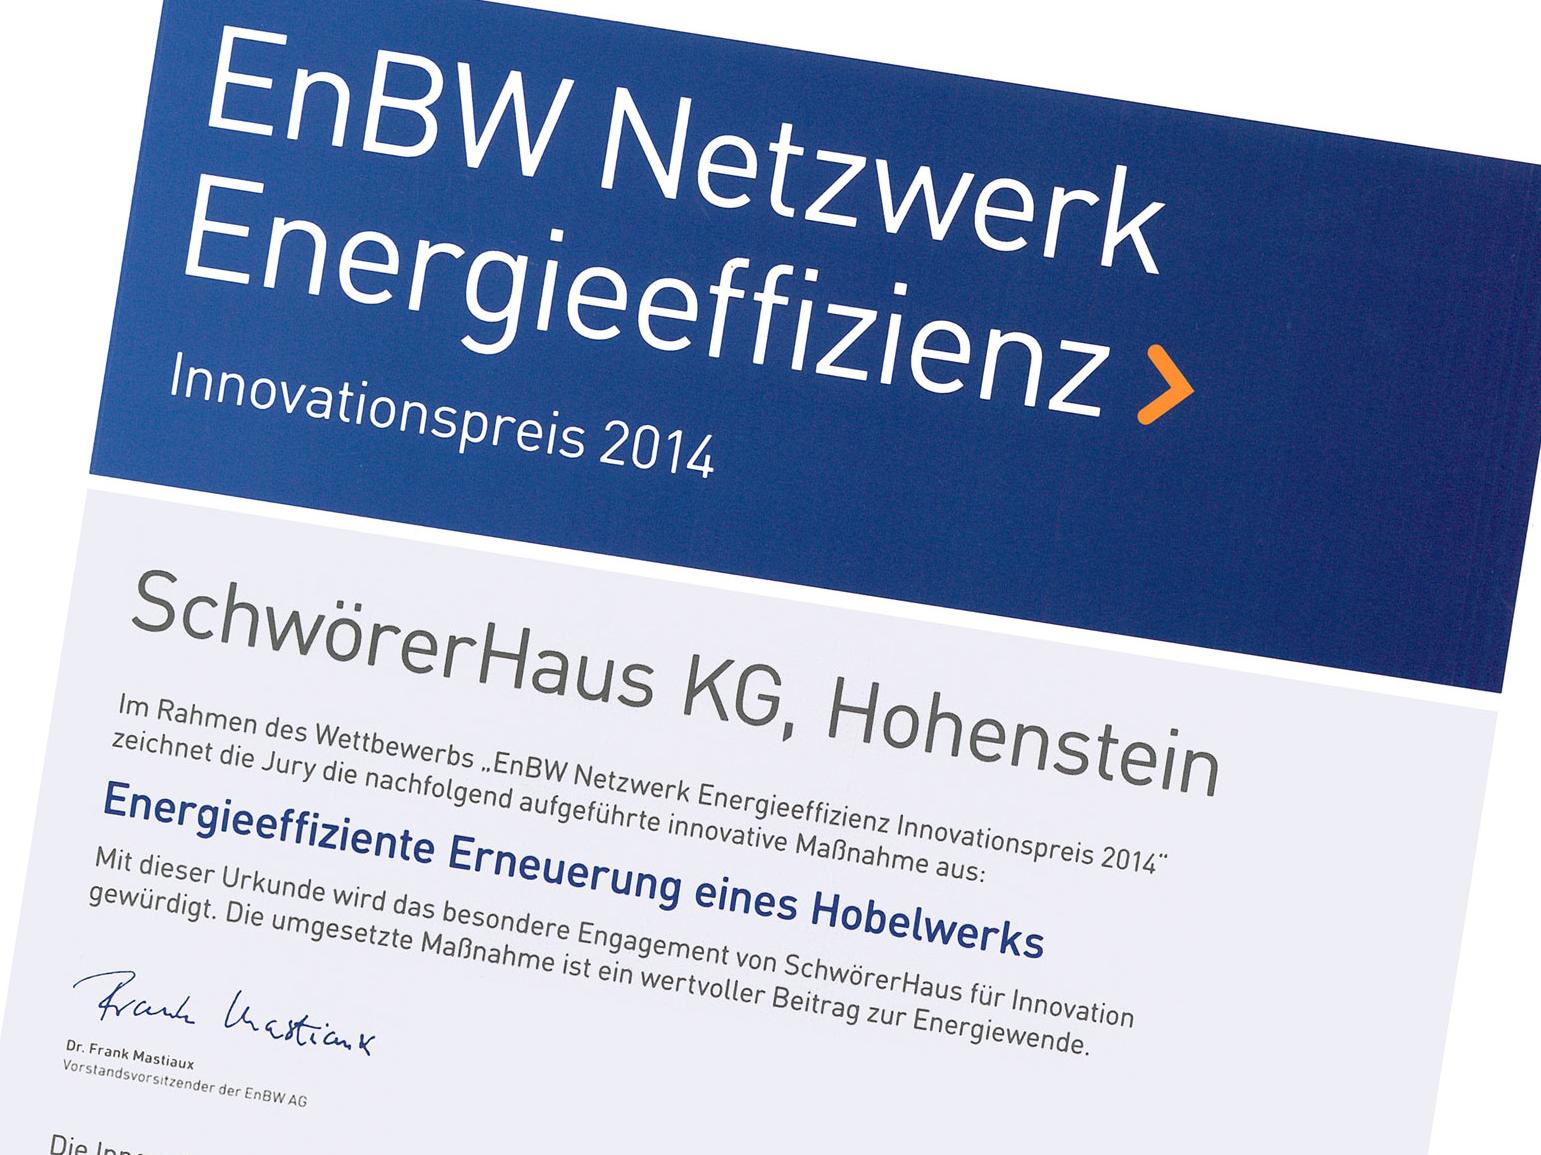 [Translate to Italiano:] Innovationspreis durch EnBW-Netzwerk Energieeffizienz